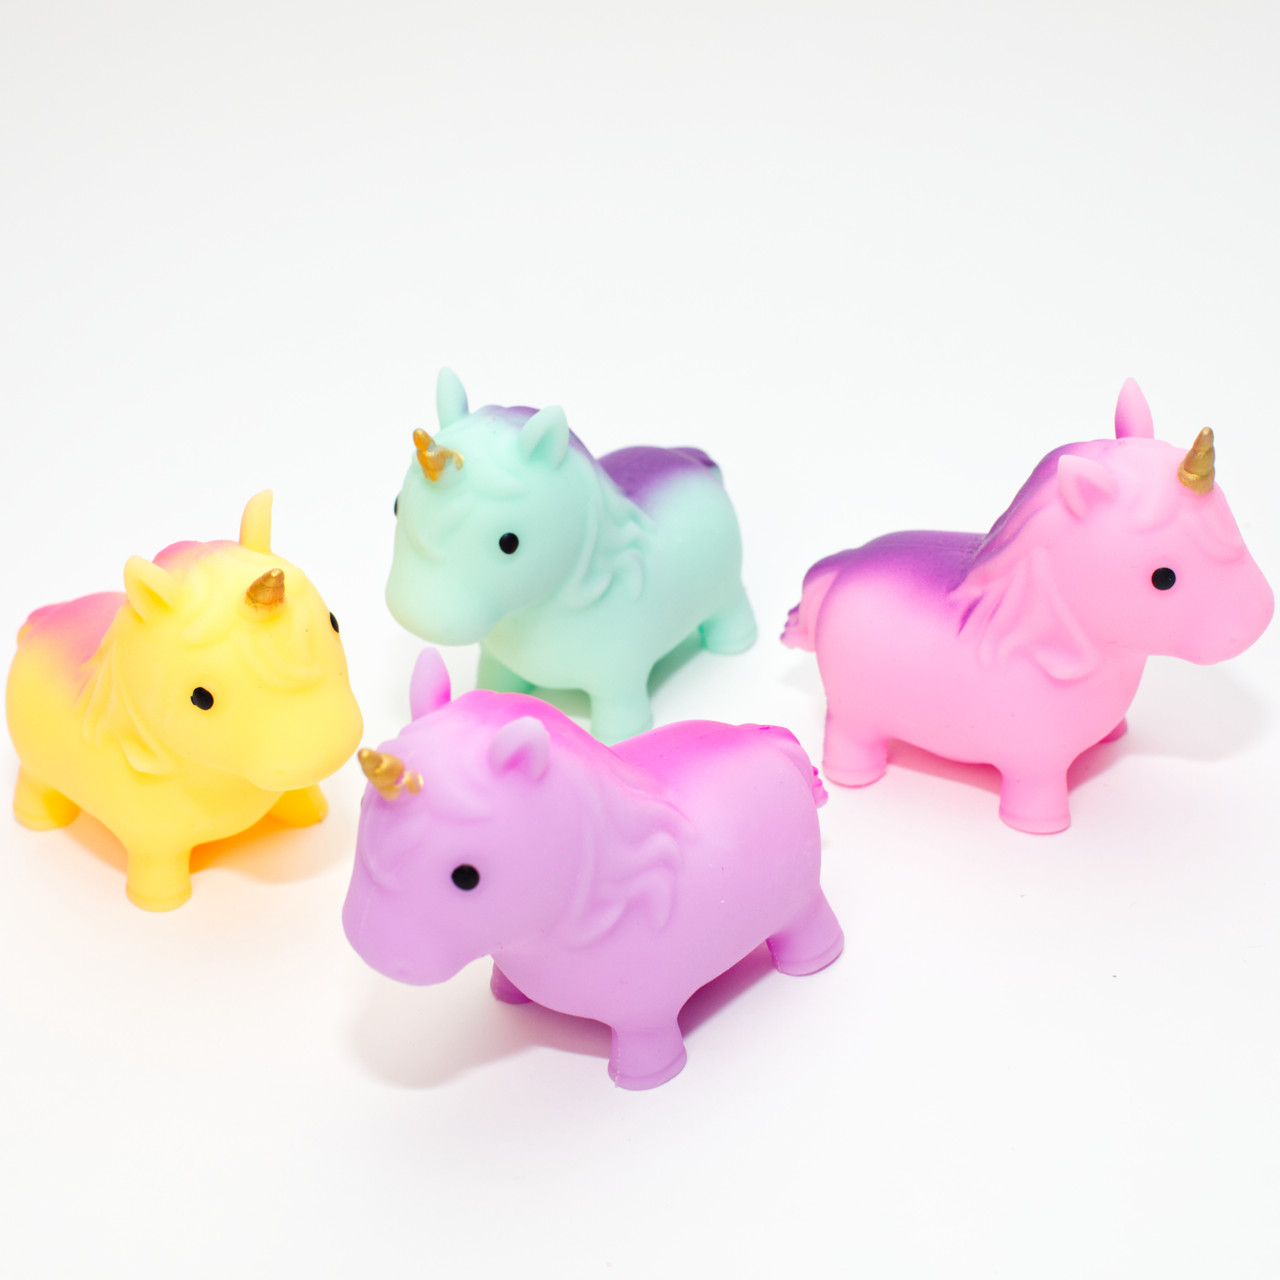 Squishy Unicorn - 12 per pack - Small Toys